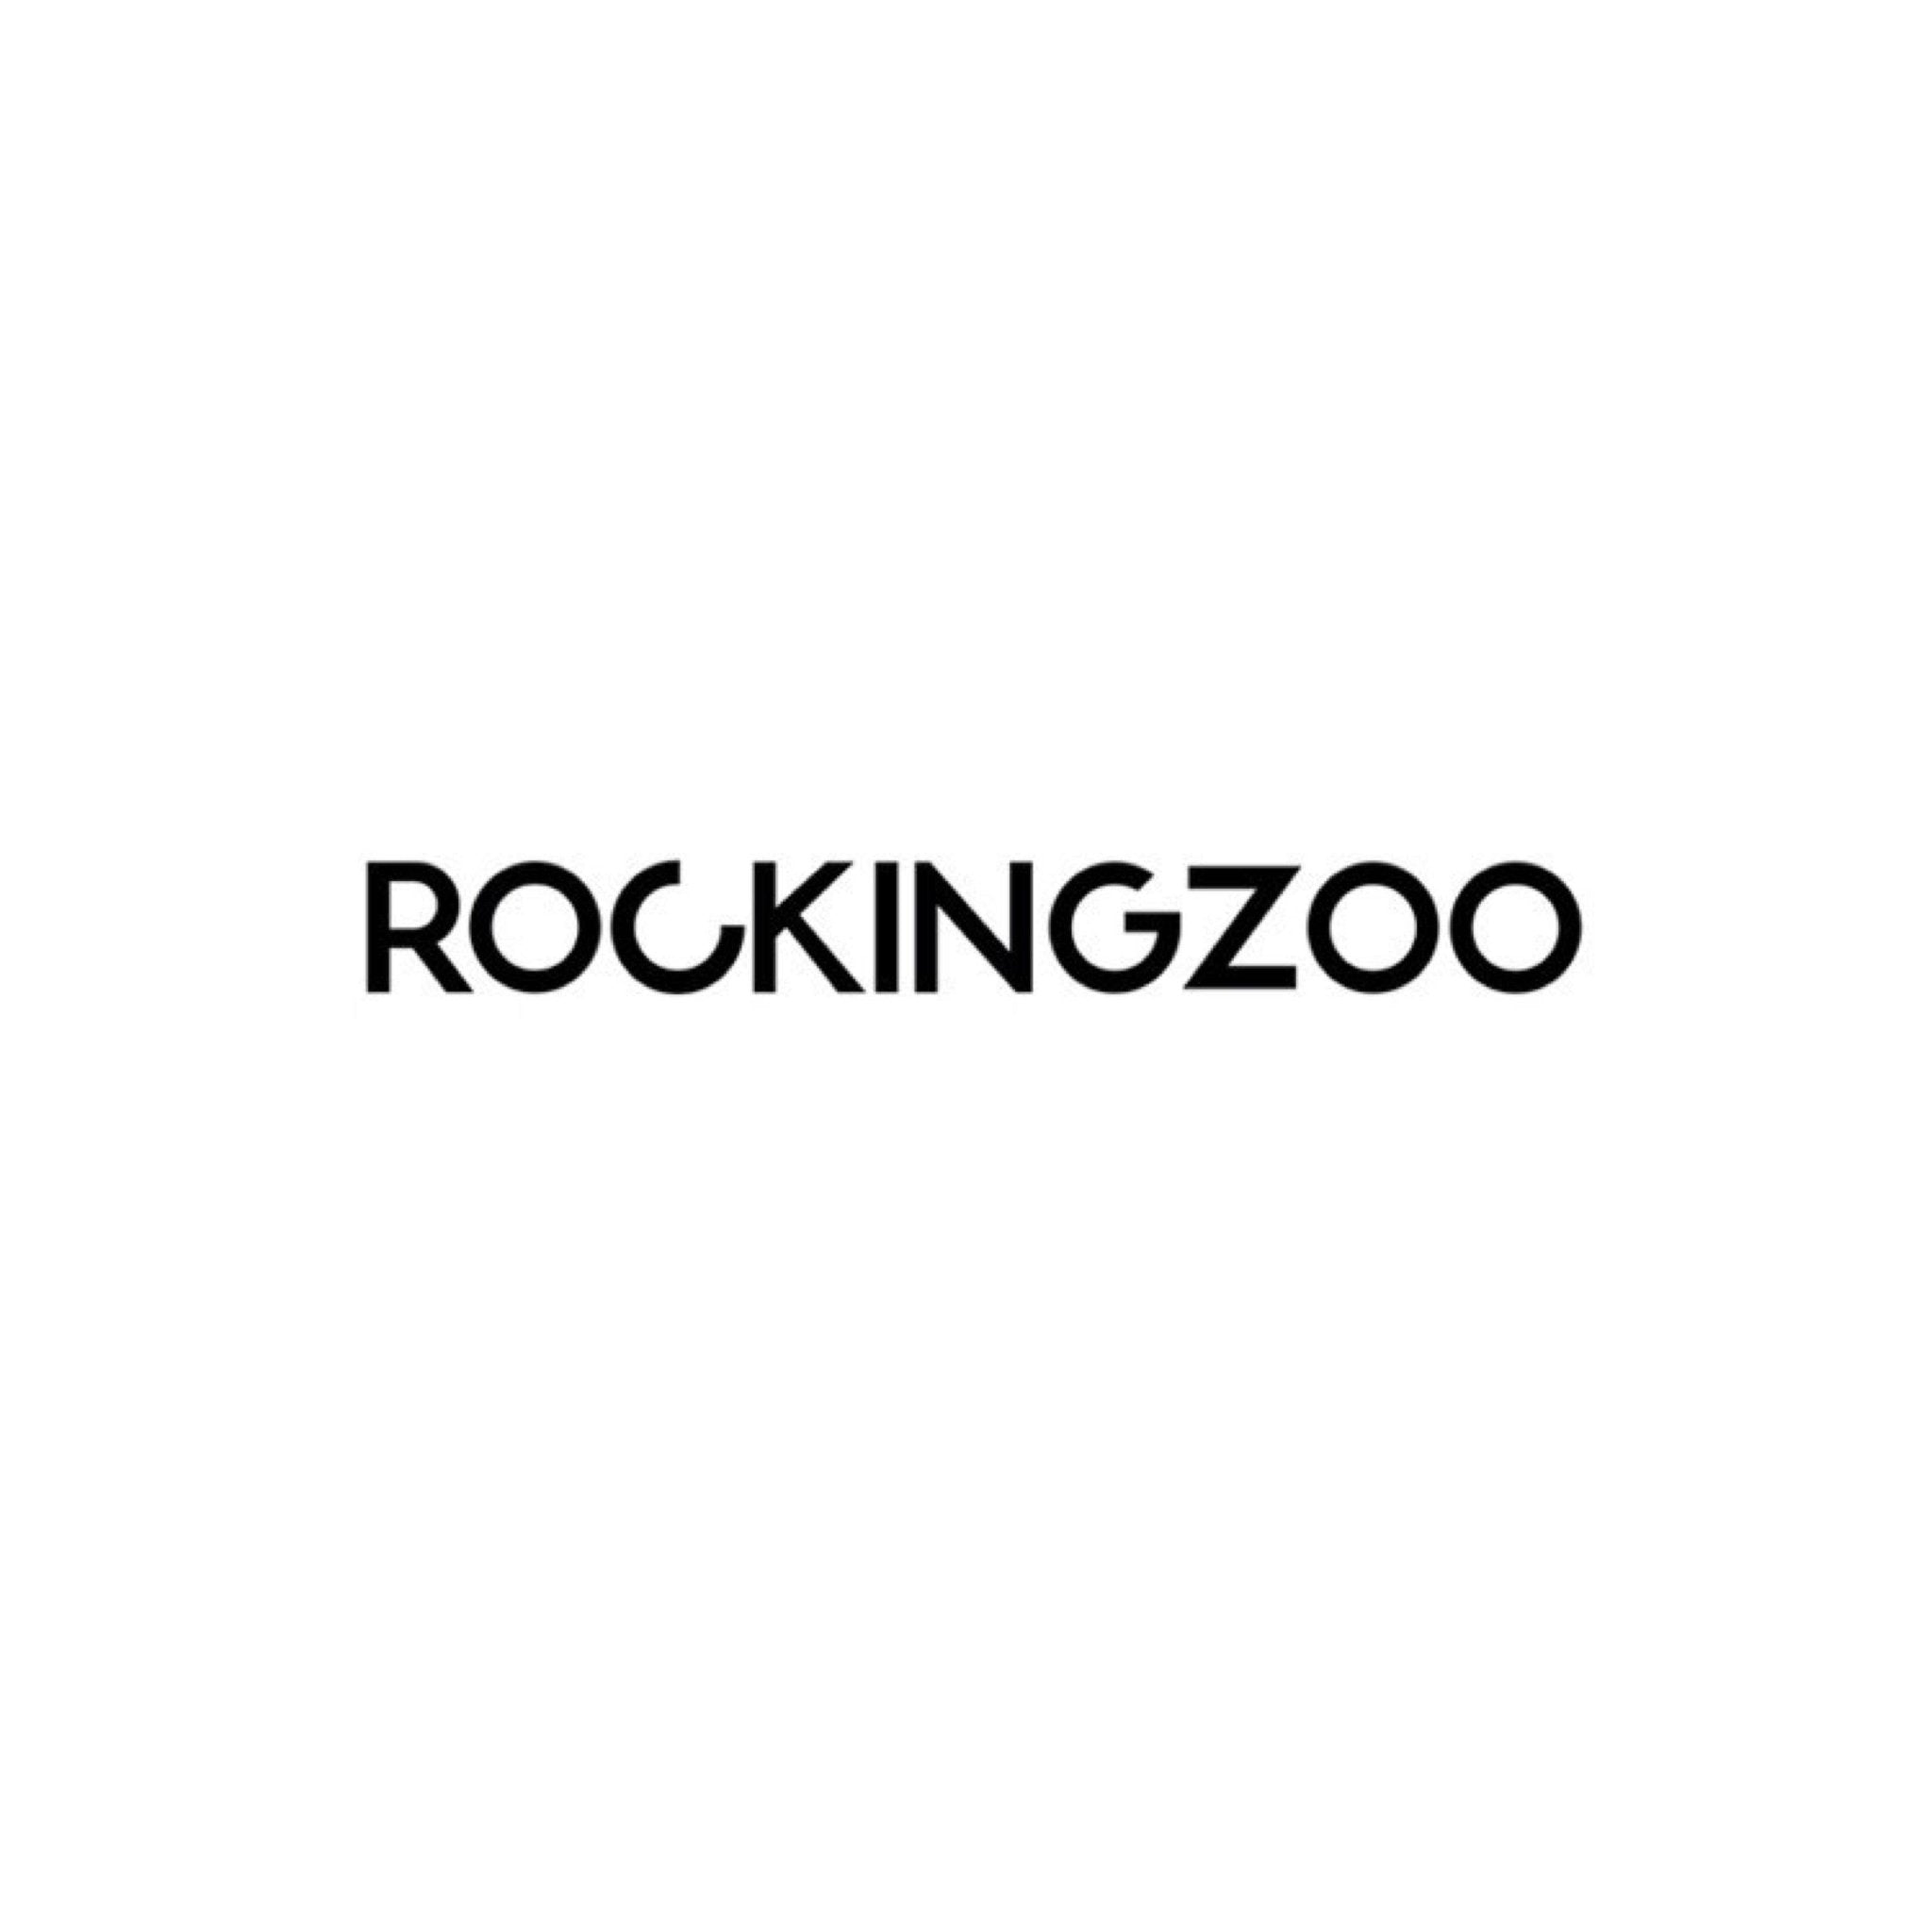 Rockingzoo | 摇滚动物园 - Chic Decent